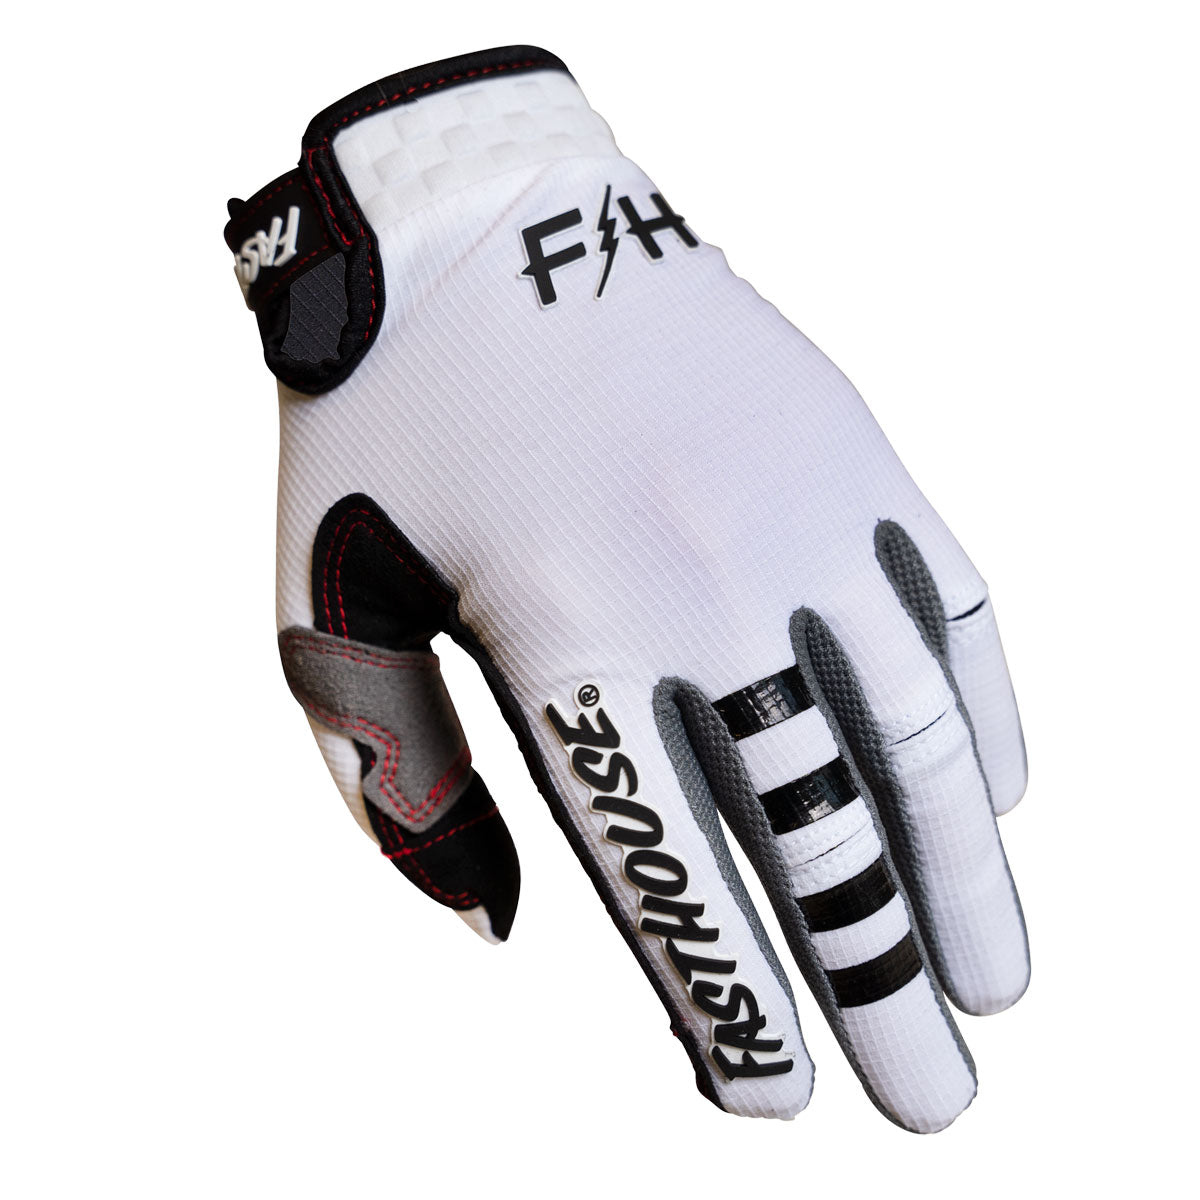 Elrod Air Glove - White/Black